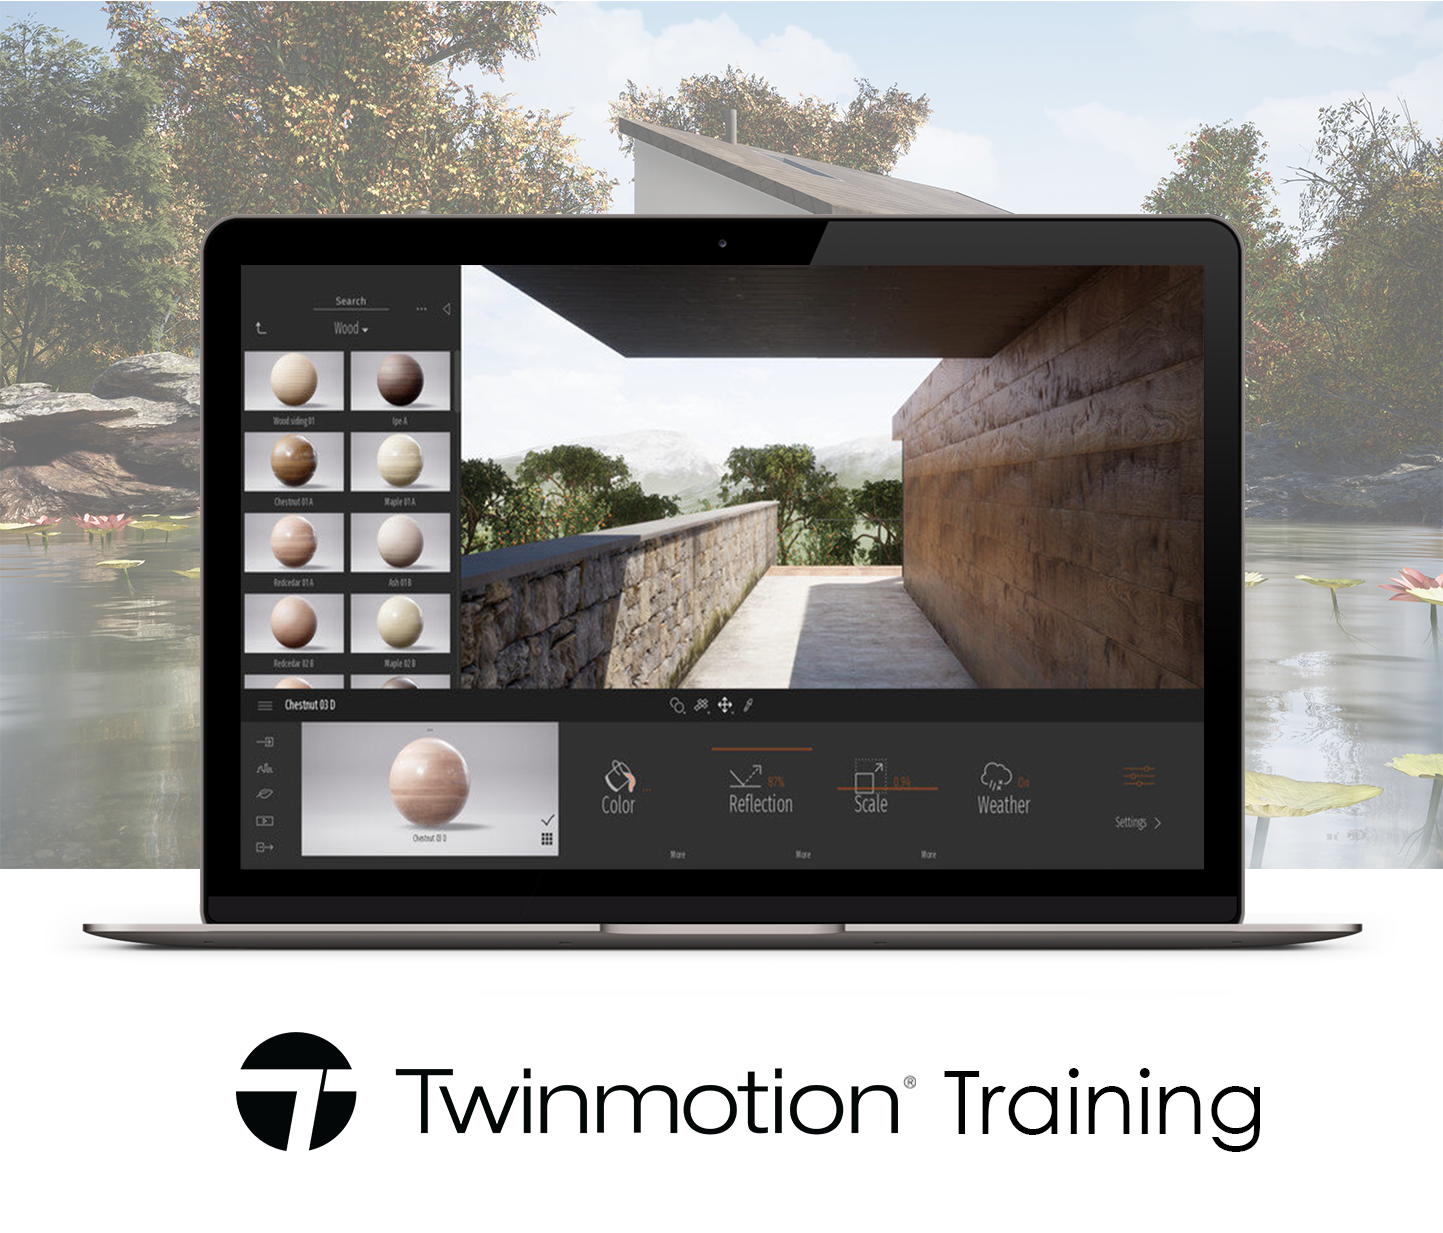 Twinmotion training solidworks 2010 64 bit crack download